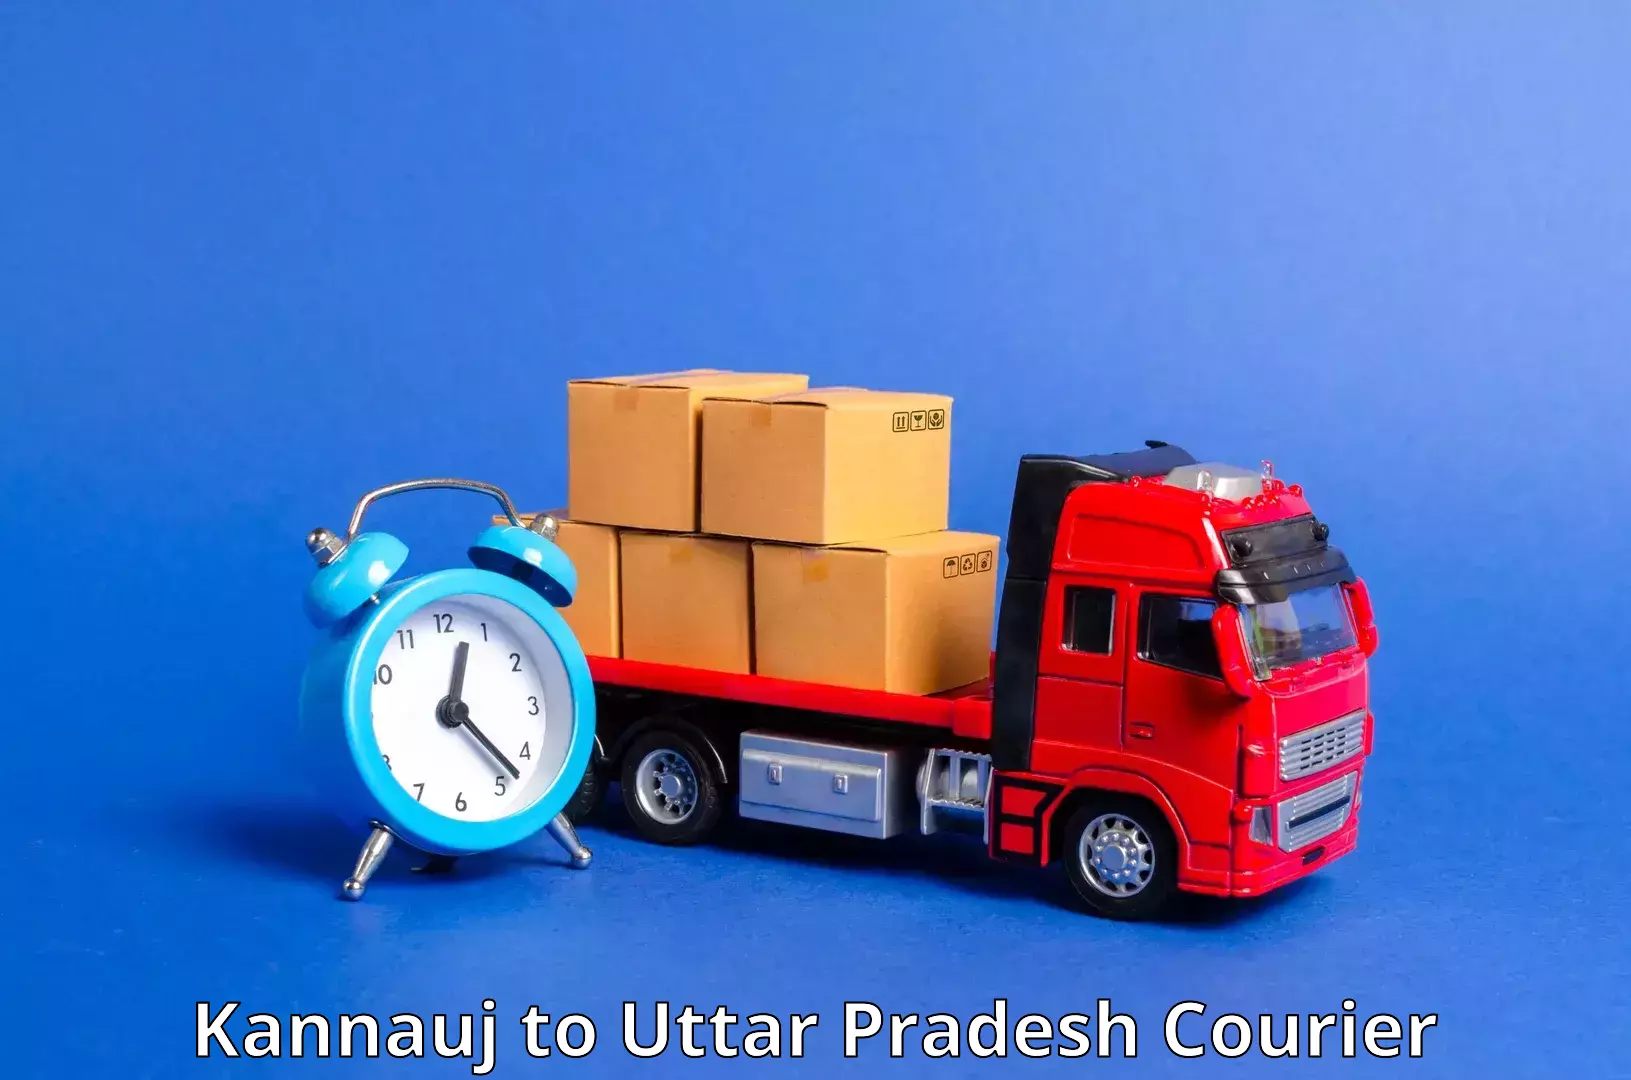 Courier service comparison Kannauj to Kalpi